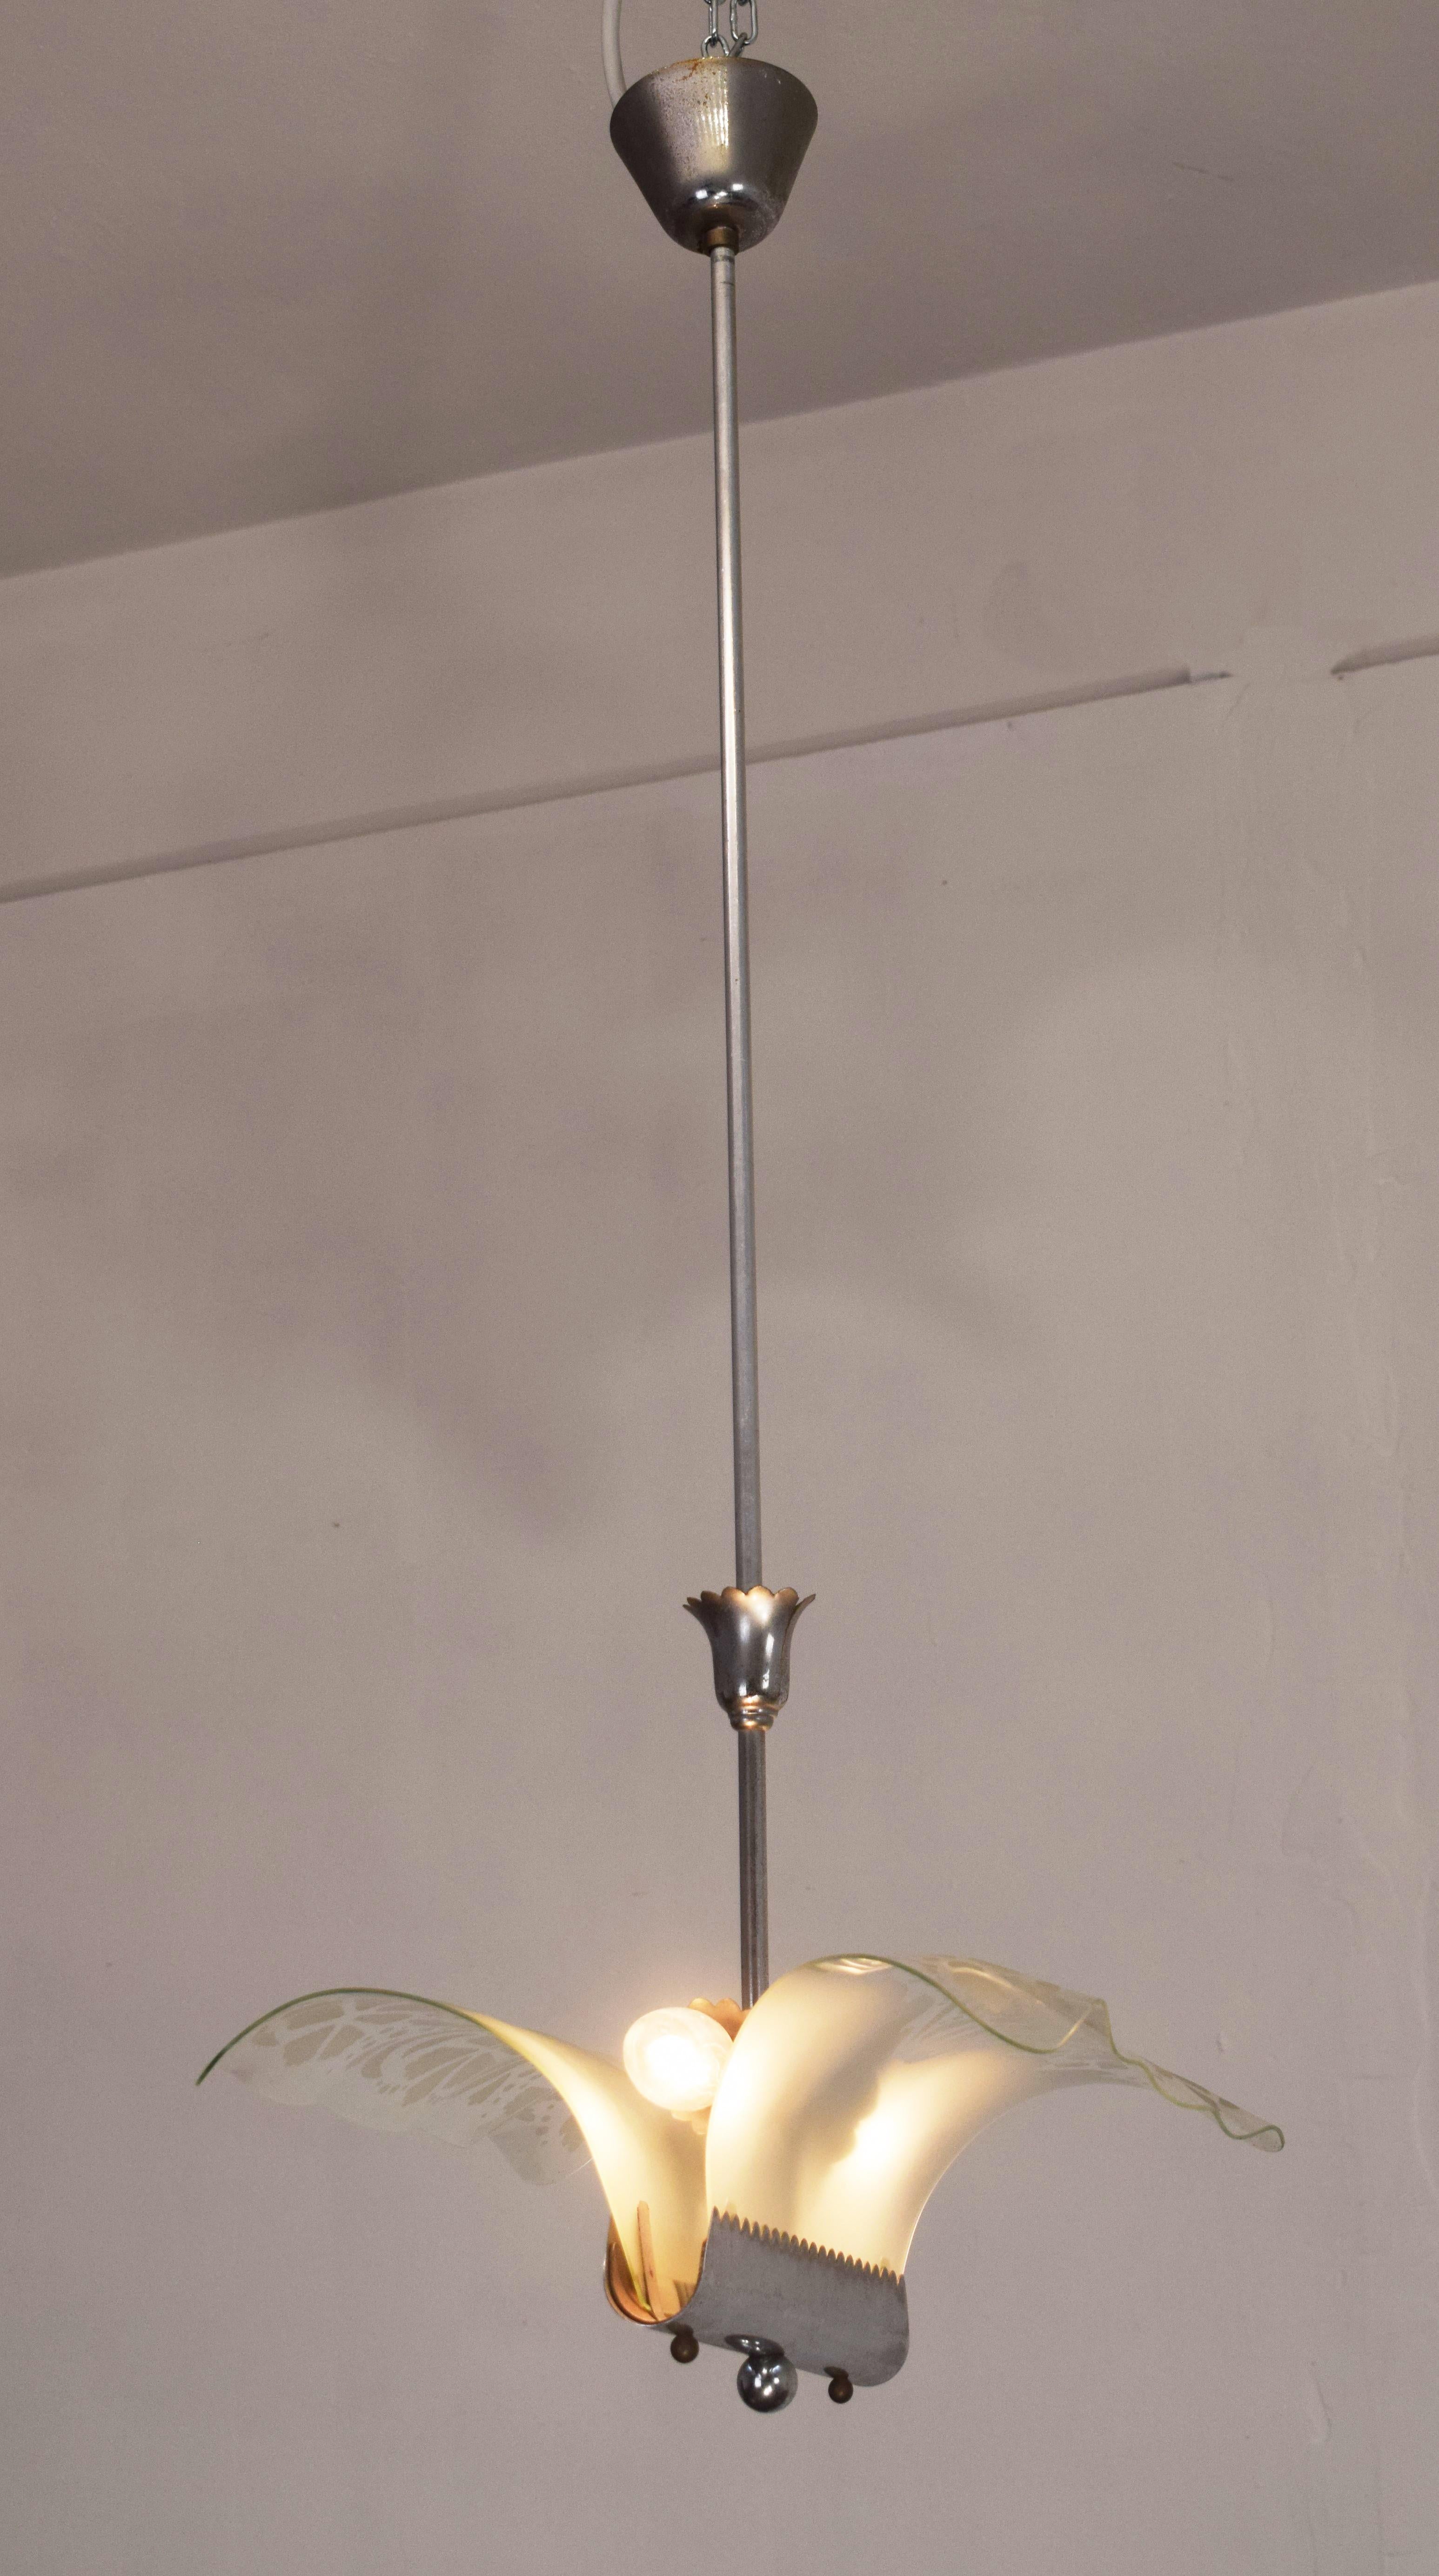 Suspension light in the style of Pietro Chiesa, Italy, 1940s.

Dimensions: H= 90 cm; W= 40 cm; D= 30 cm.